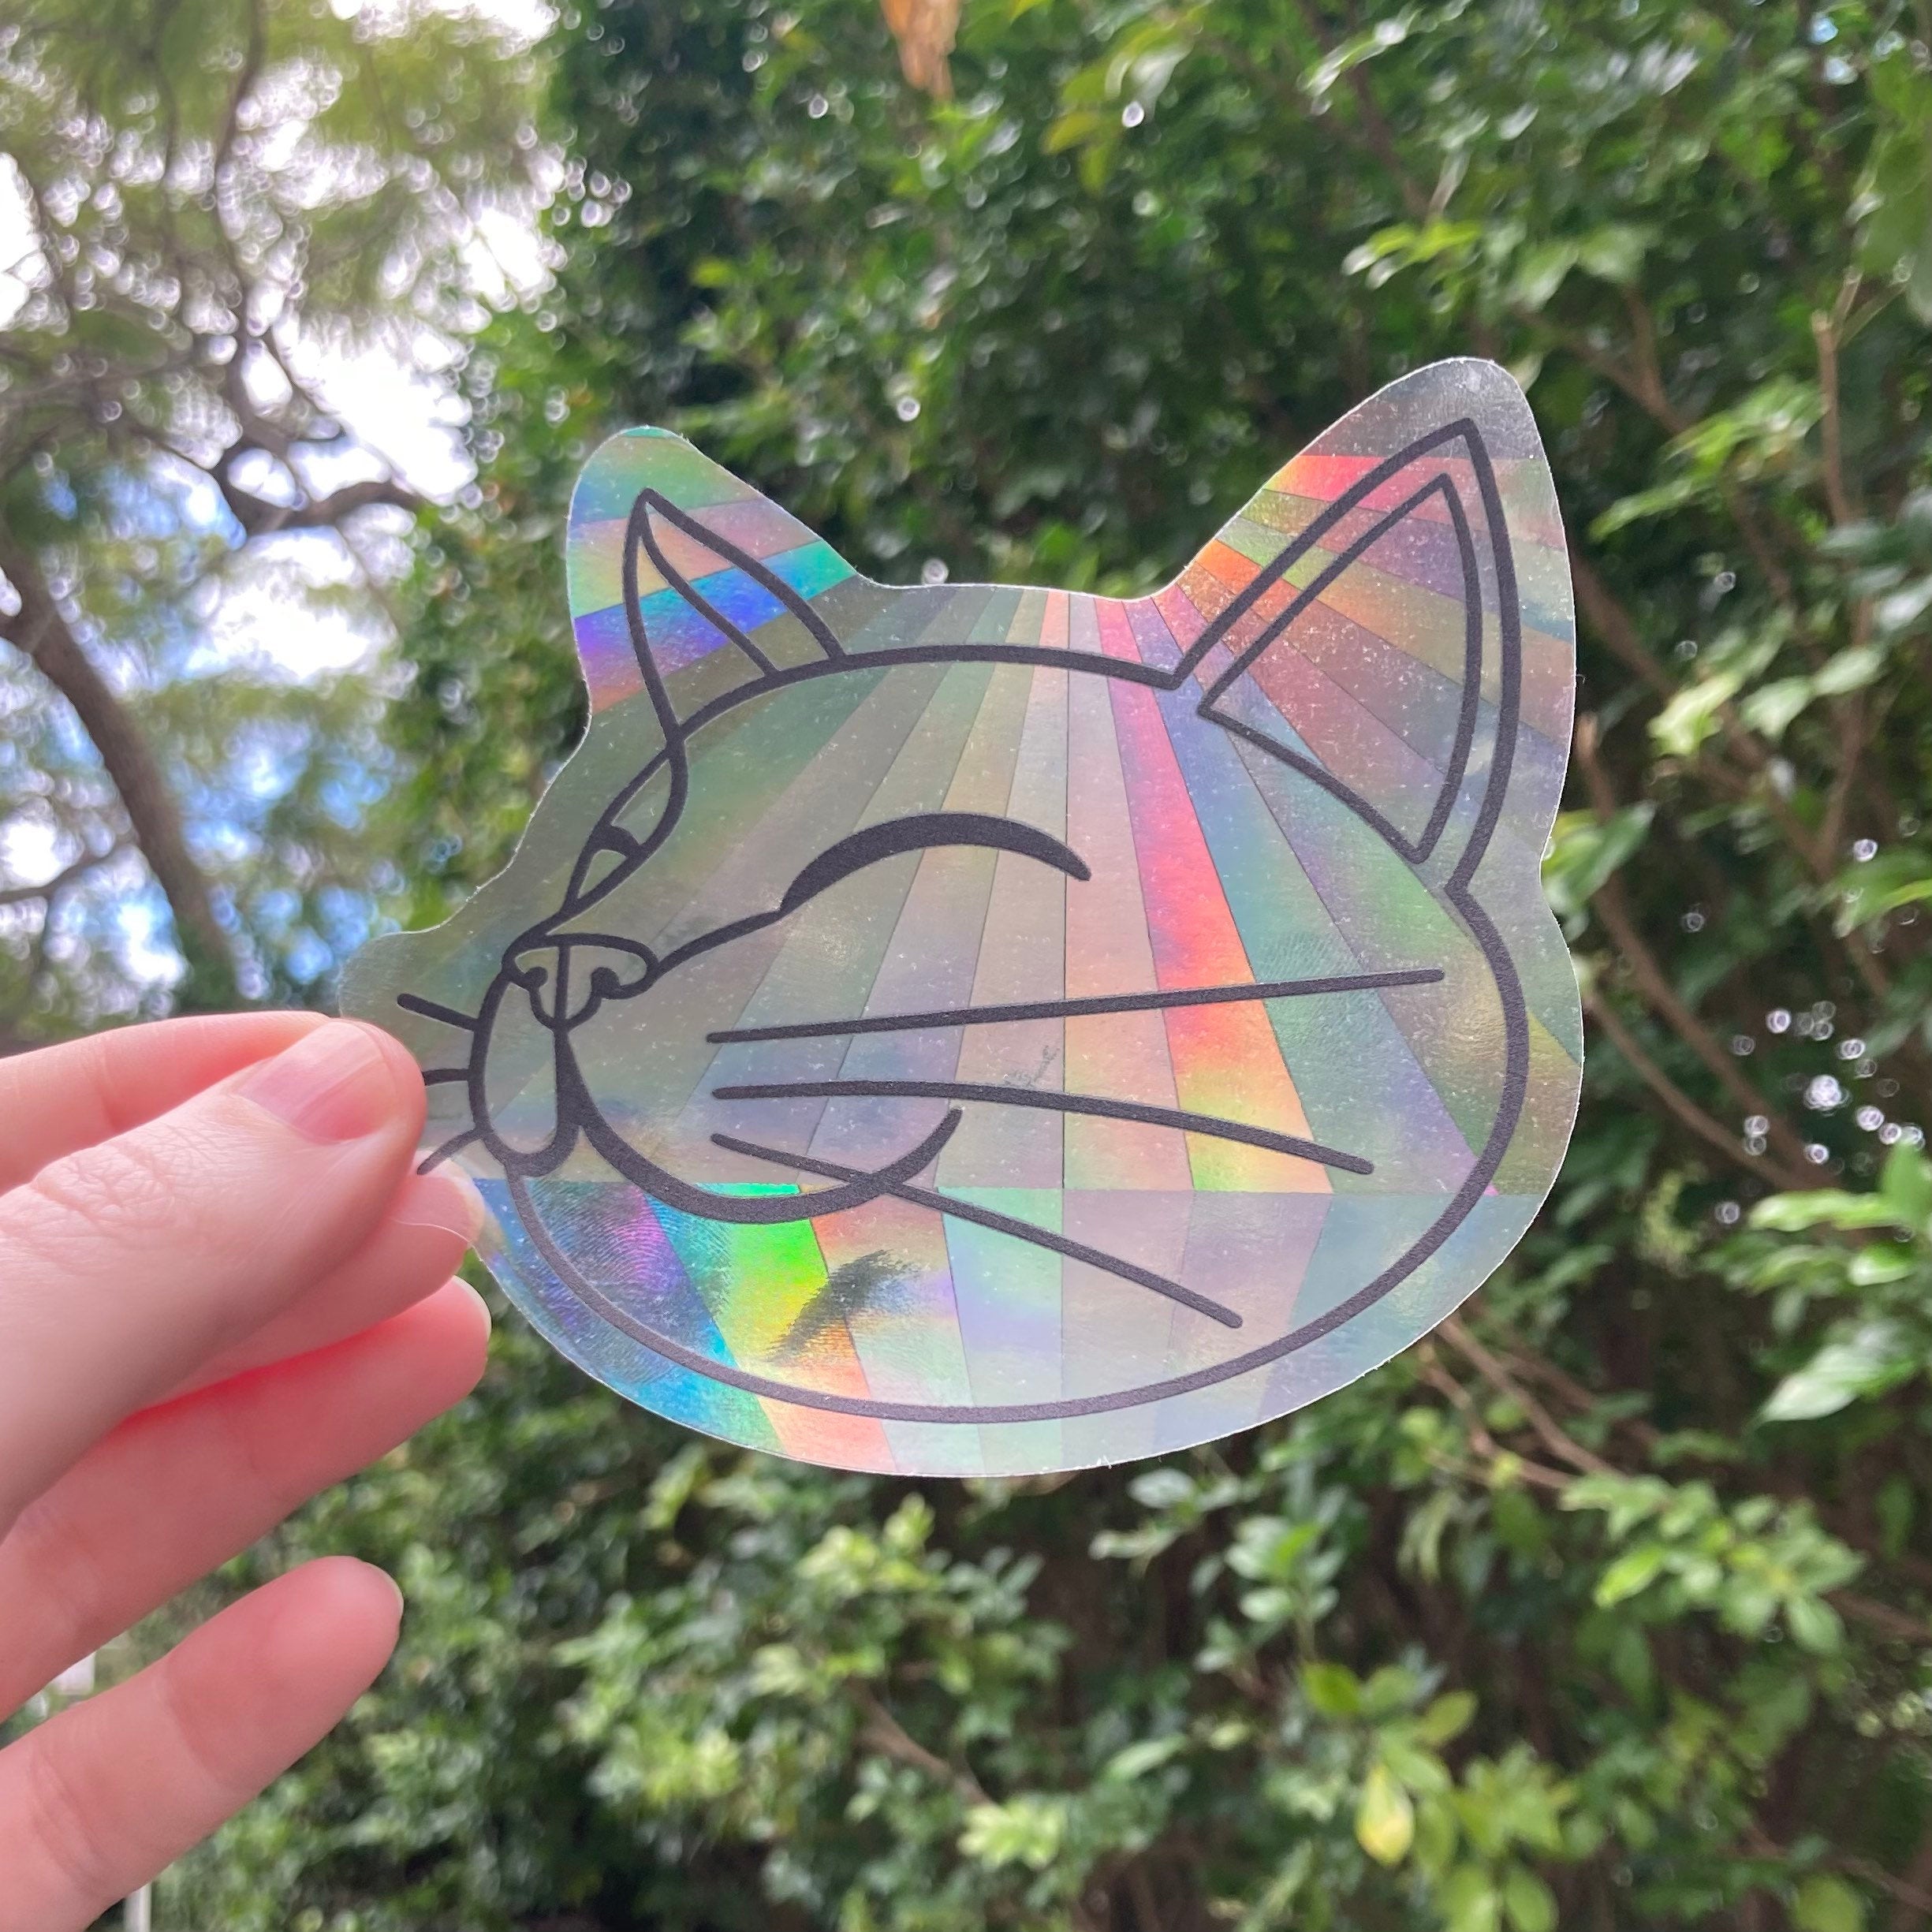 Happy Cat Prismatic Rainbow Suncatcher Decal Sticker - 4” wide, transparent sun catcher - stained glass window effect